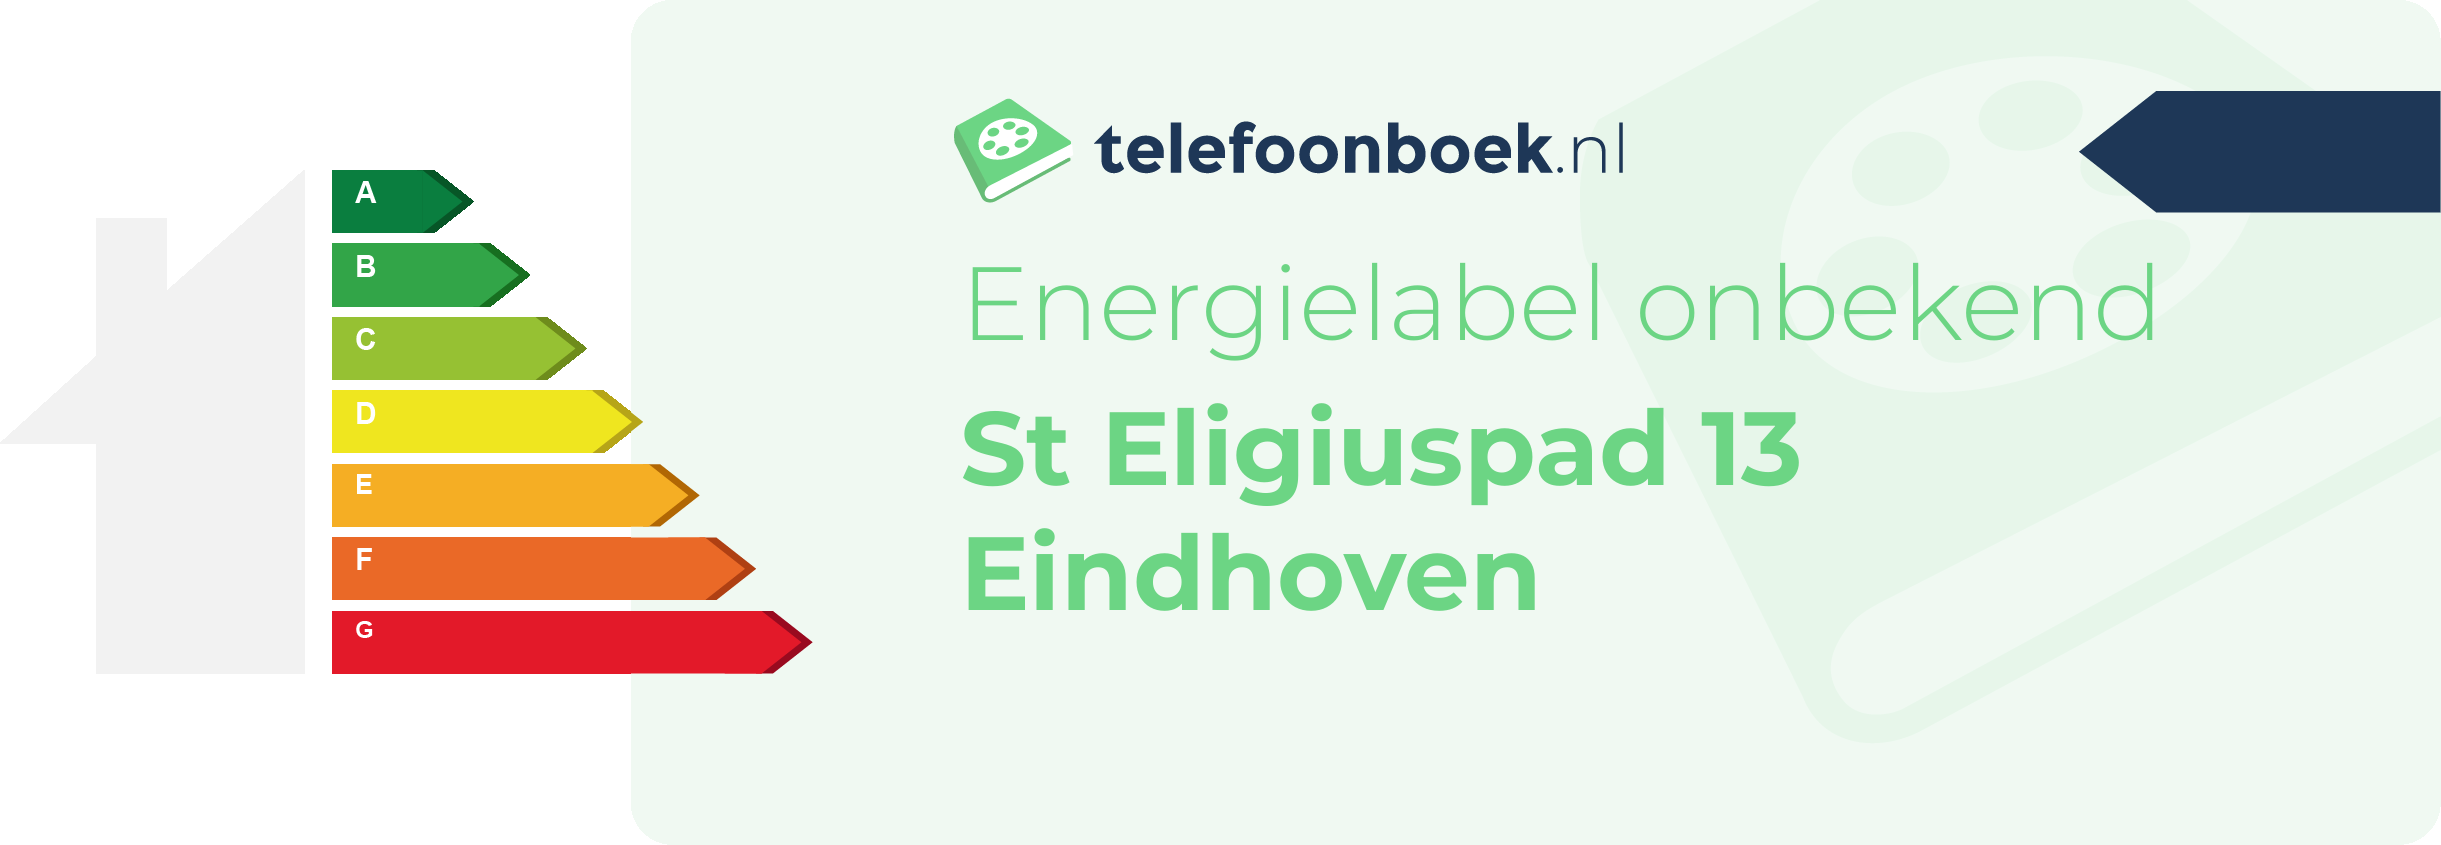 Energielabel St Eligiuspad 13 Eindhoven